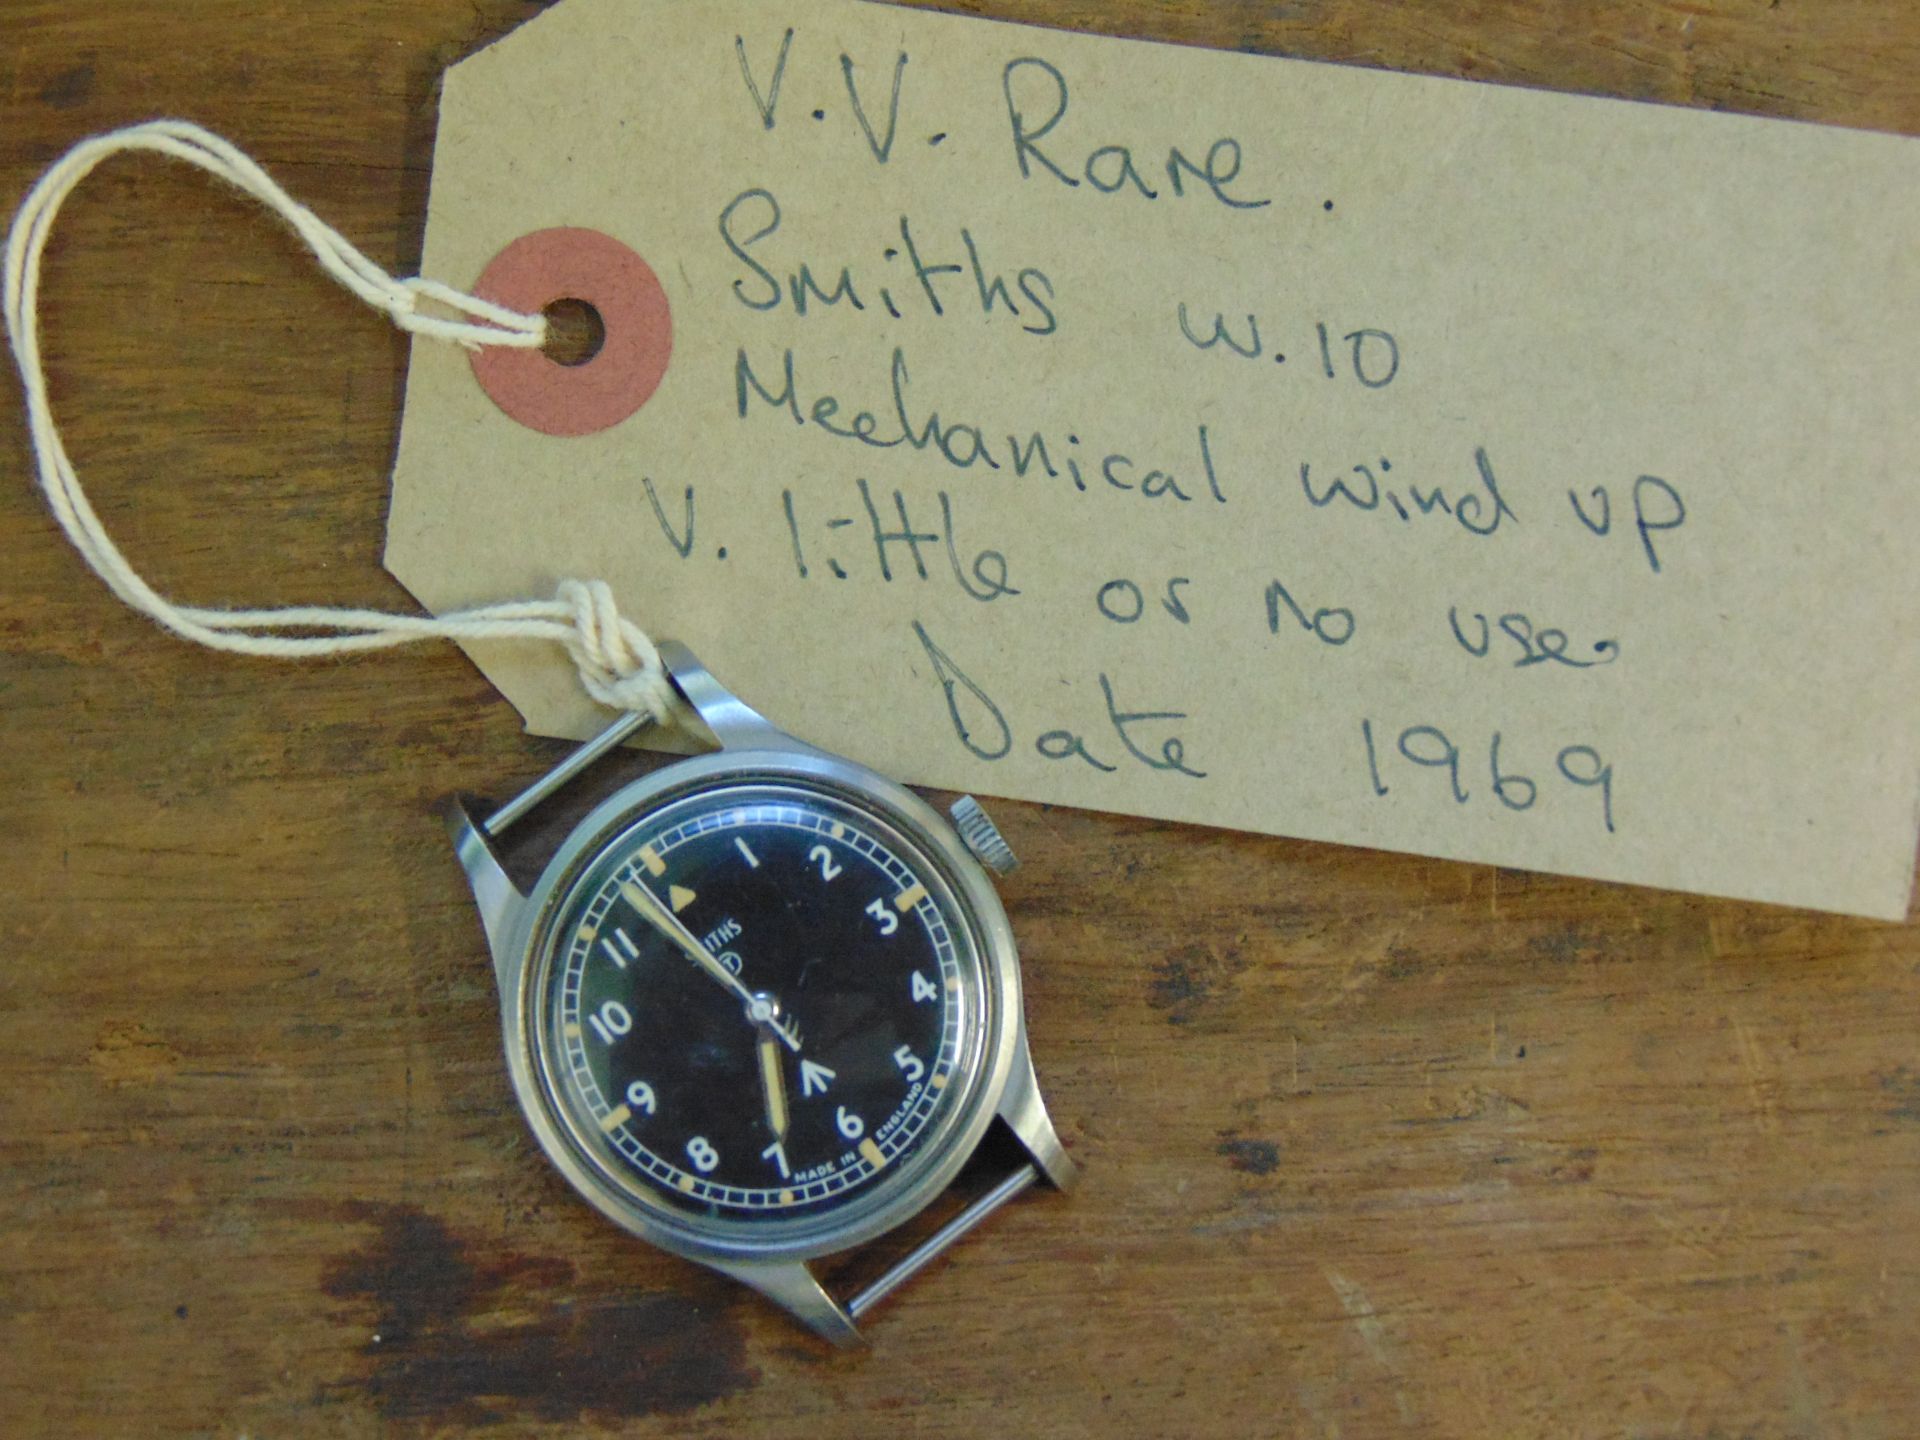 V.V. Rare Smiths W10 British Army Watch W10/6645-99-961-4045 - Image 4 of 5